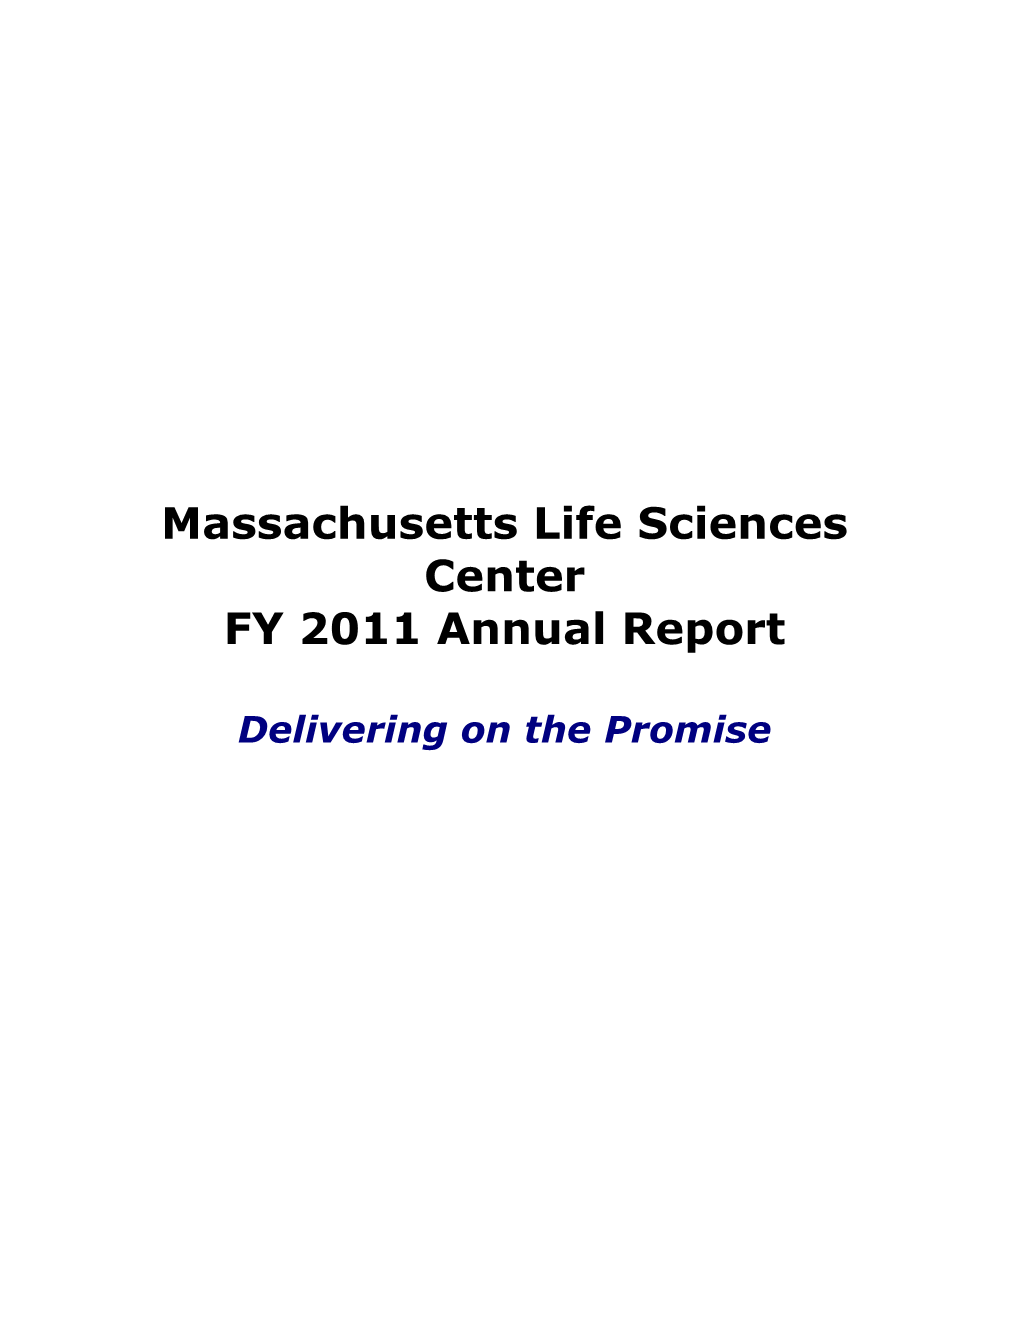 Massachusetts Life Sciences Center FY 2011 Annual Report